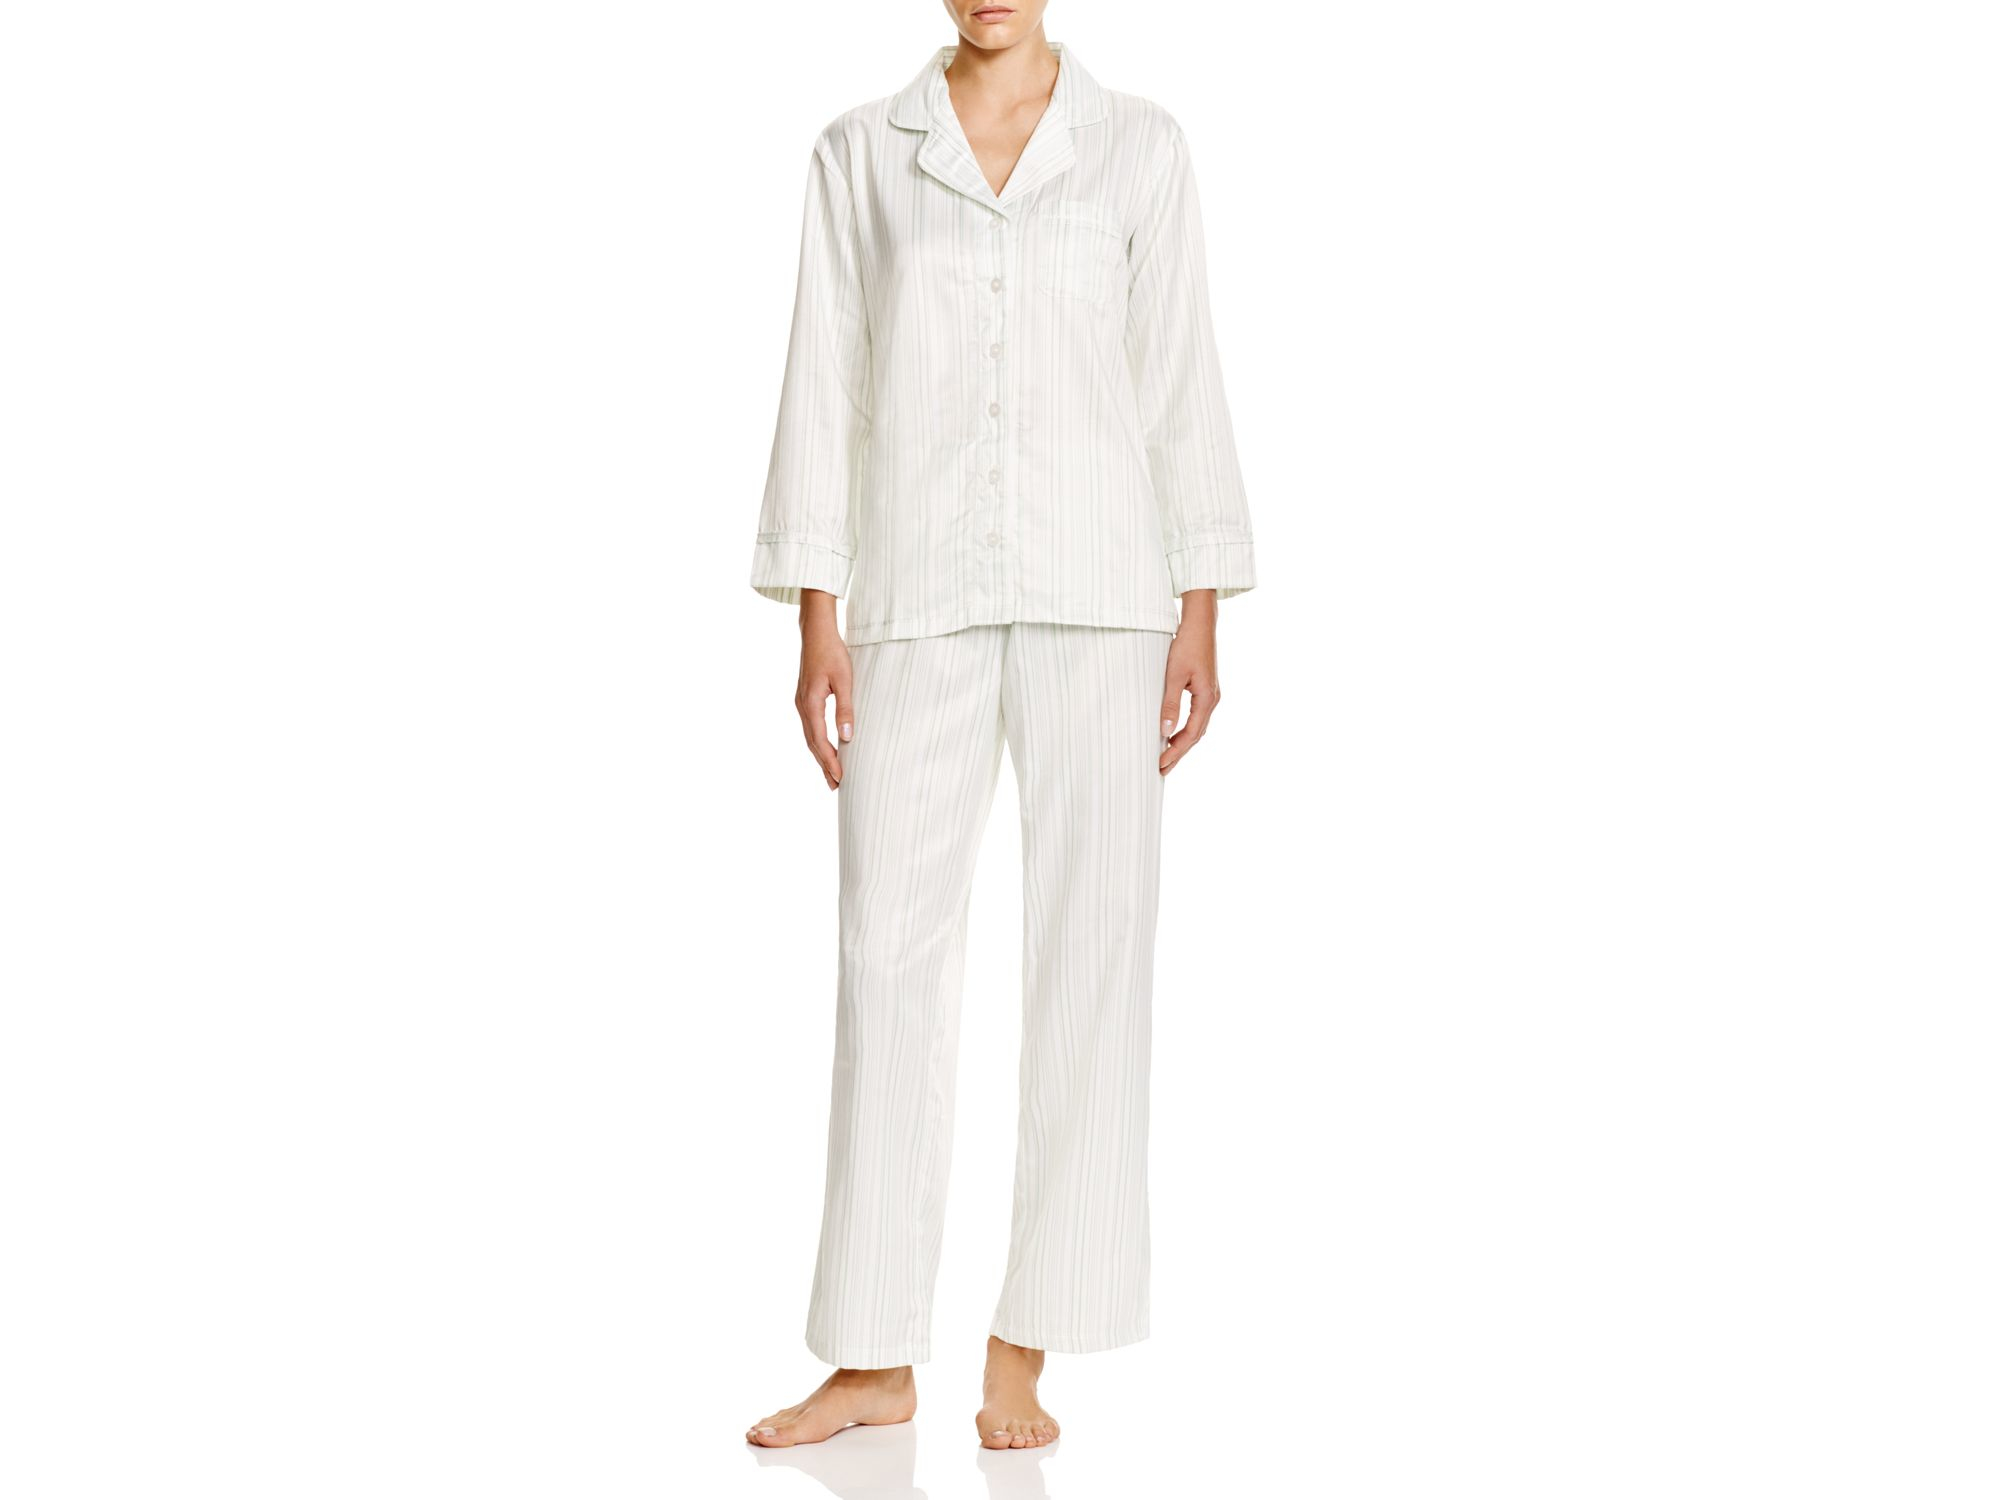 Lyst - Carole Hochman Brushed Back Satin Long Pajama Set in White